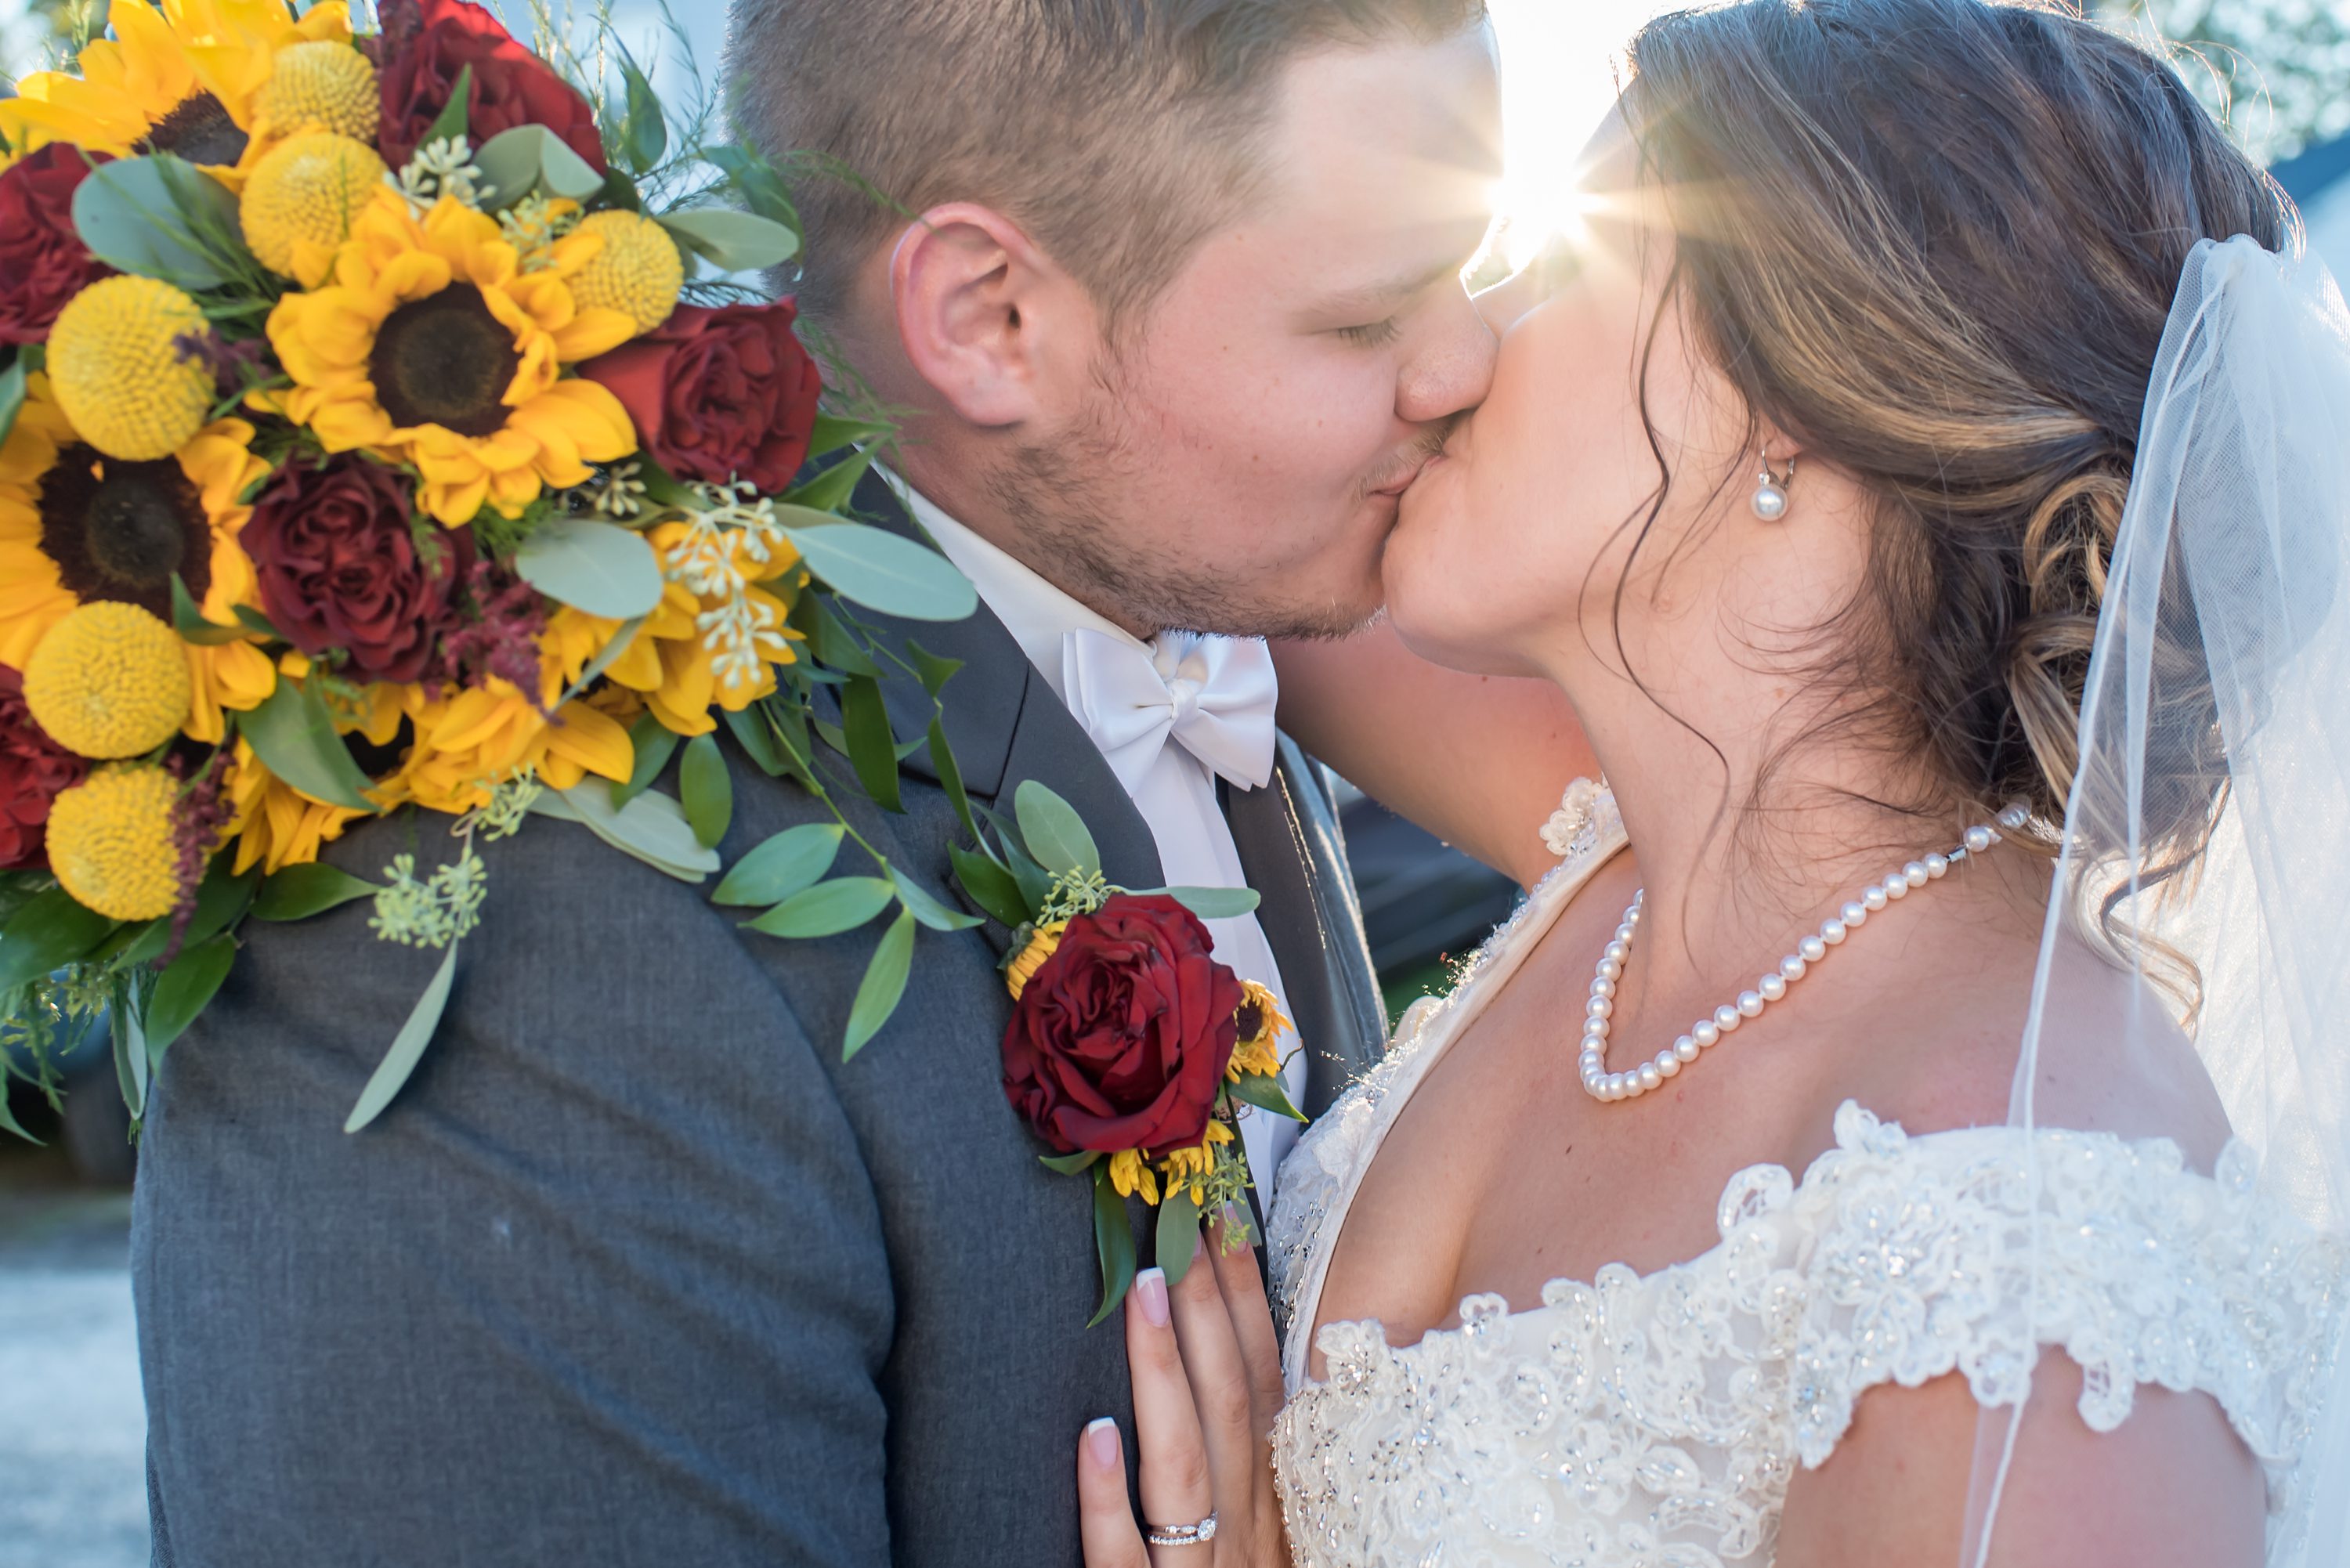 Rehoboth Wedding Photographer,Warwick Rhode Island Wedding,HartStone Flower,South County Choppers,TMW Productions, LLC,Fall wedding in New England